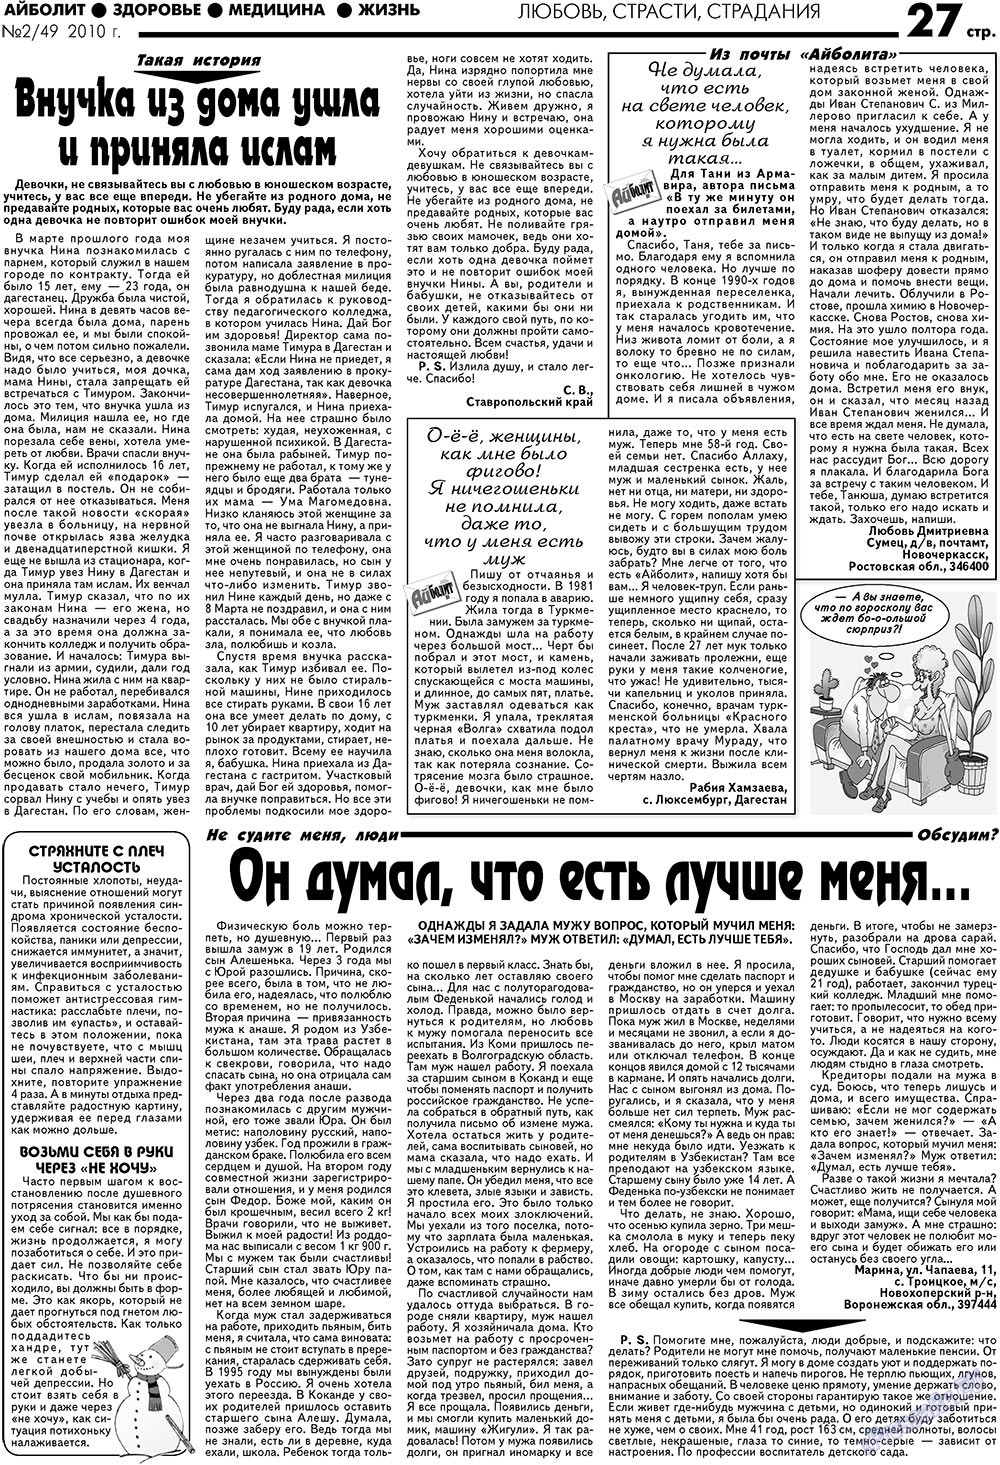 АйБолит (газета). 2010 год, номер 2, стр. 27